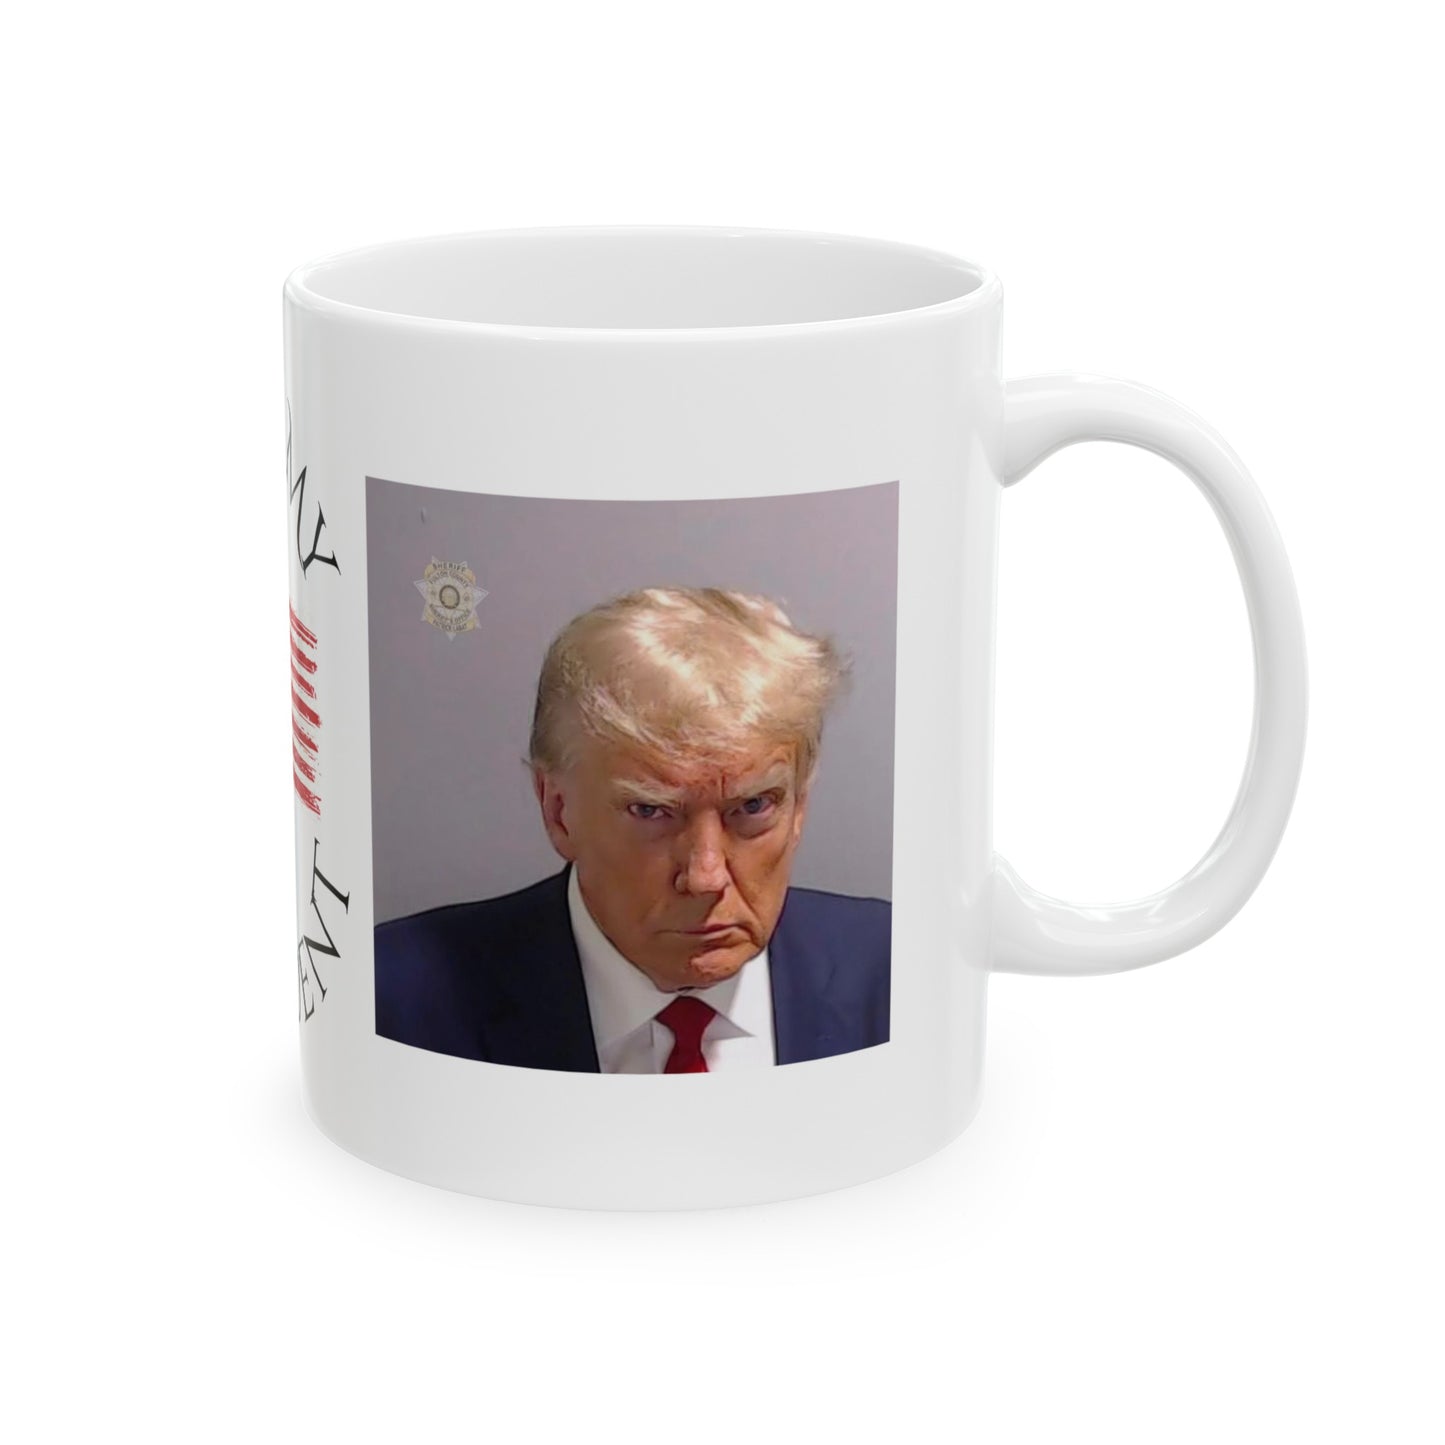 Trump Ceramic Free My President Mug, (11oz).